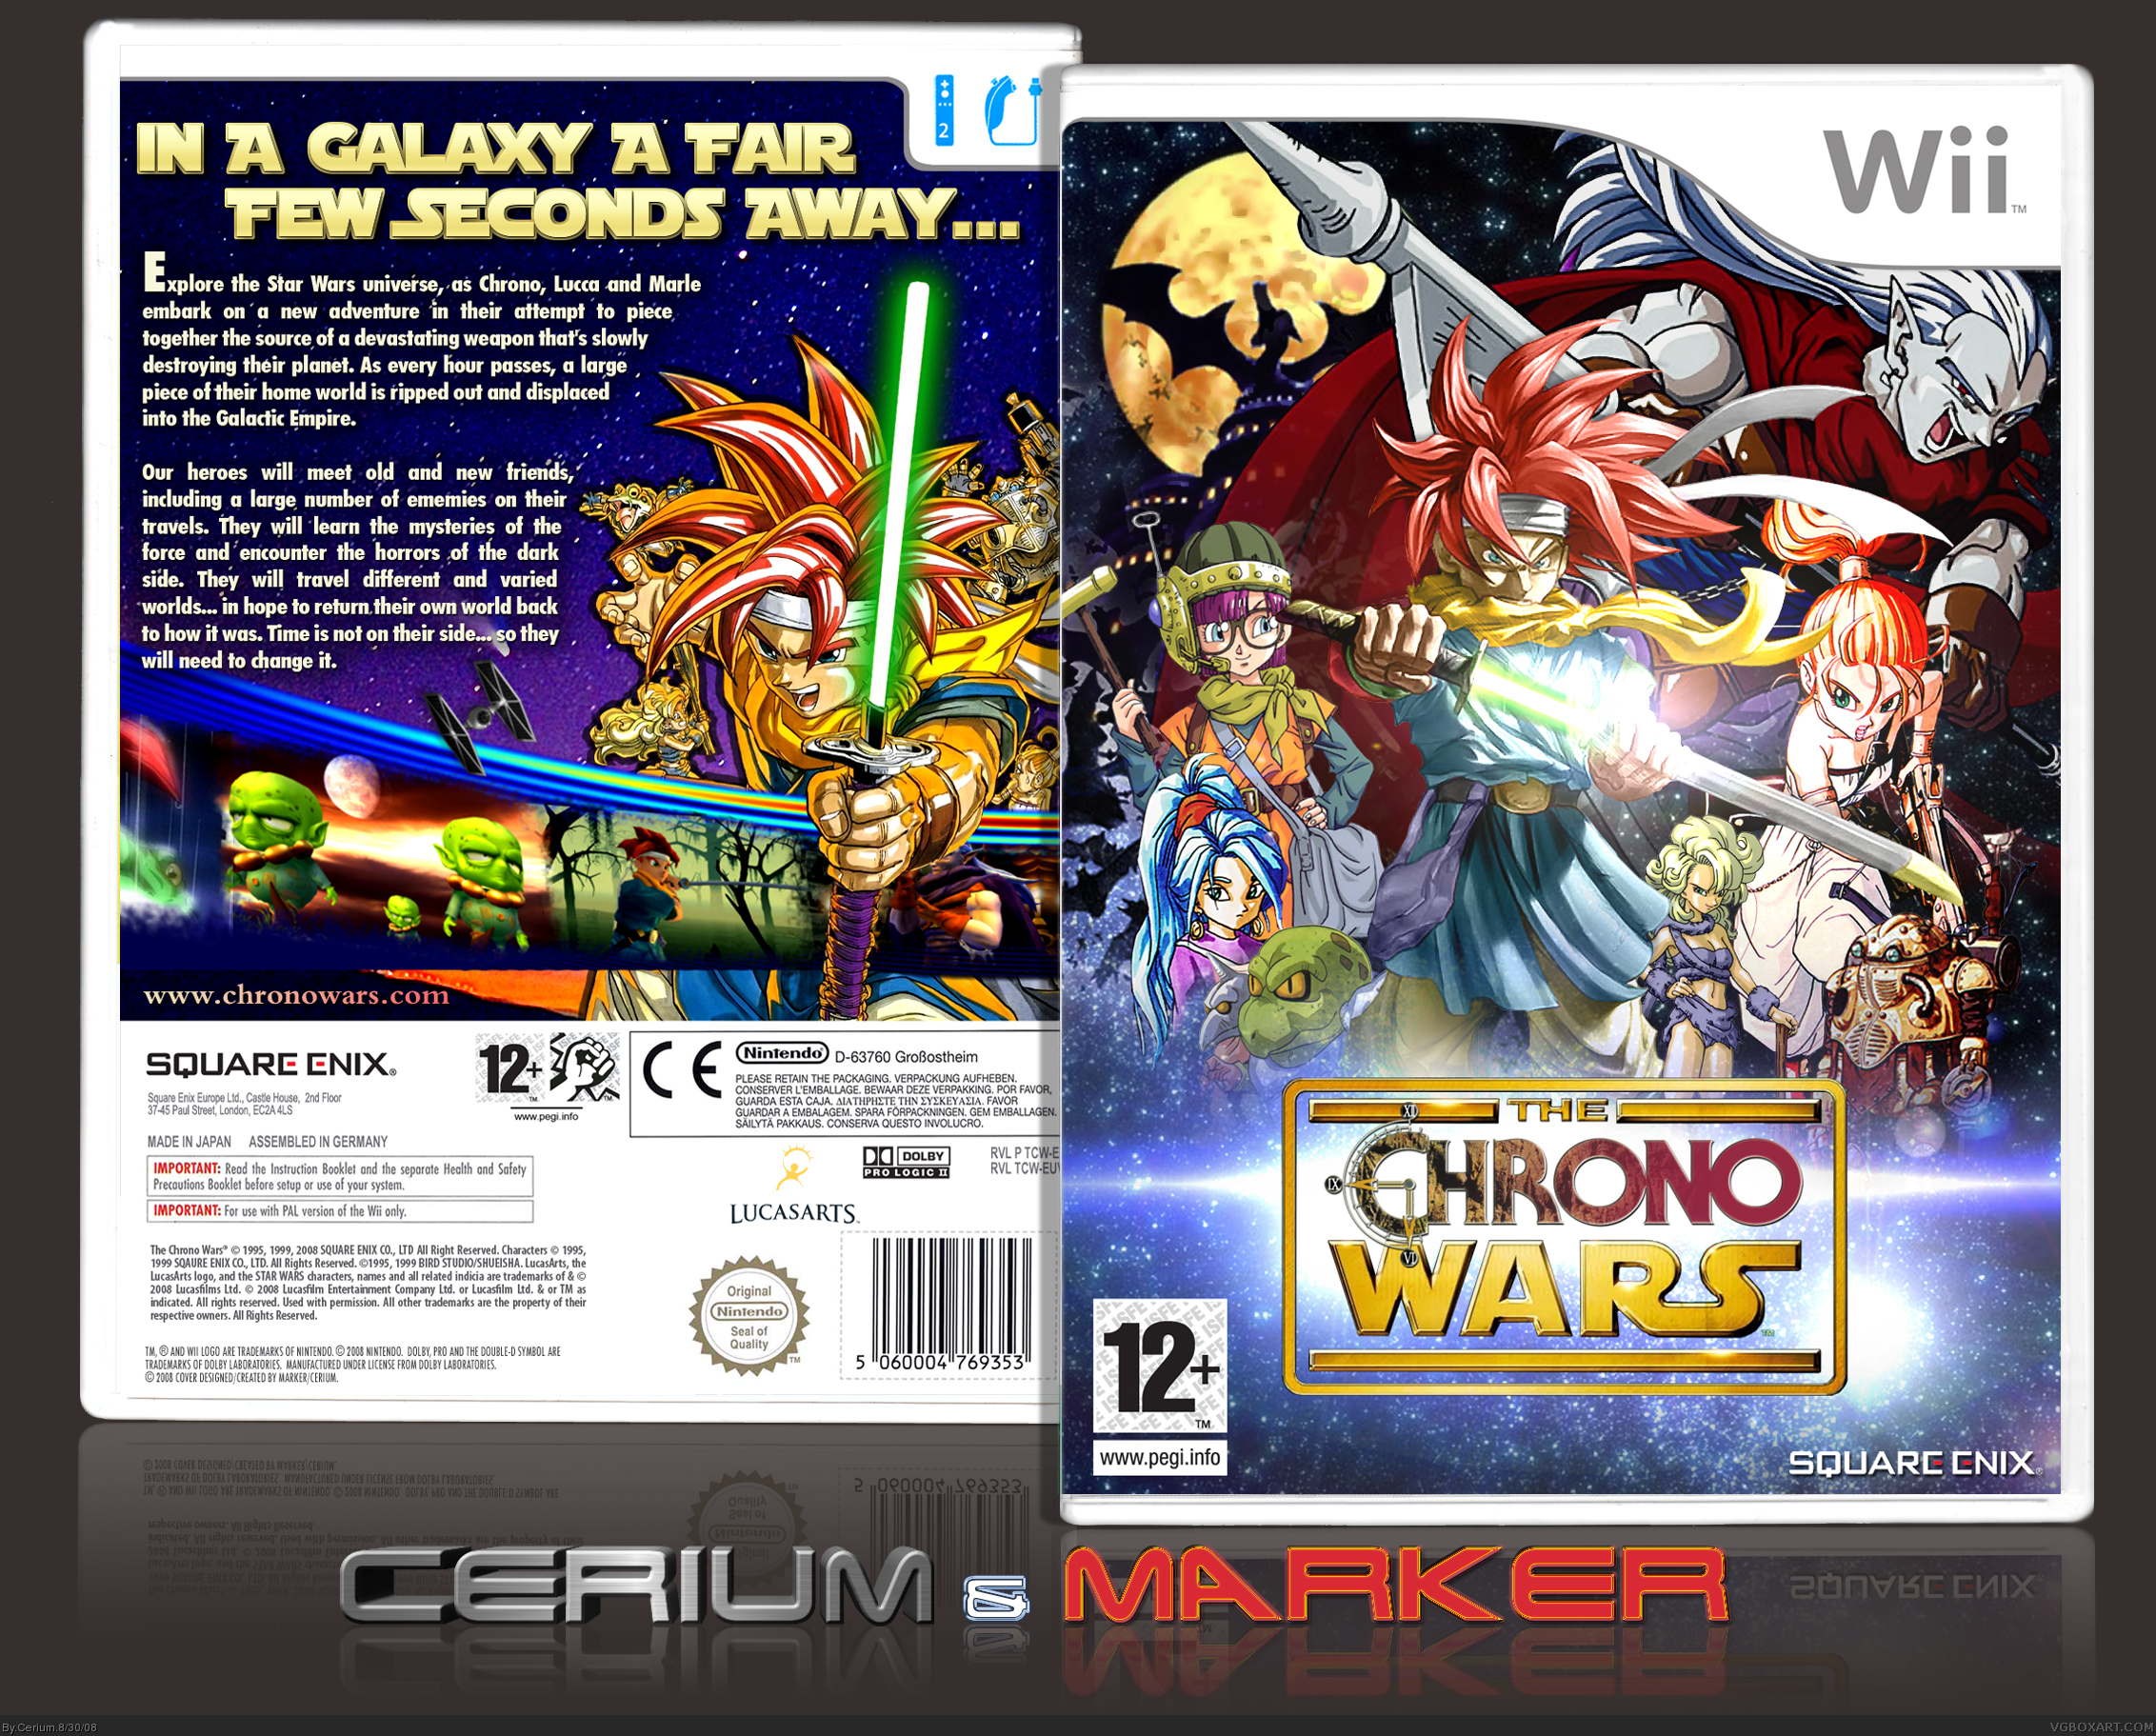 The Chrono Wars box cover